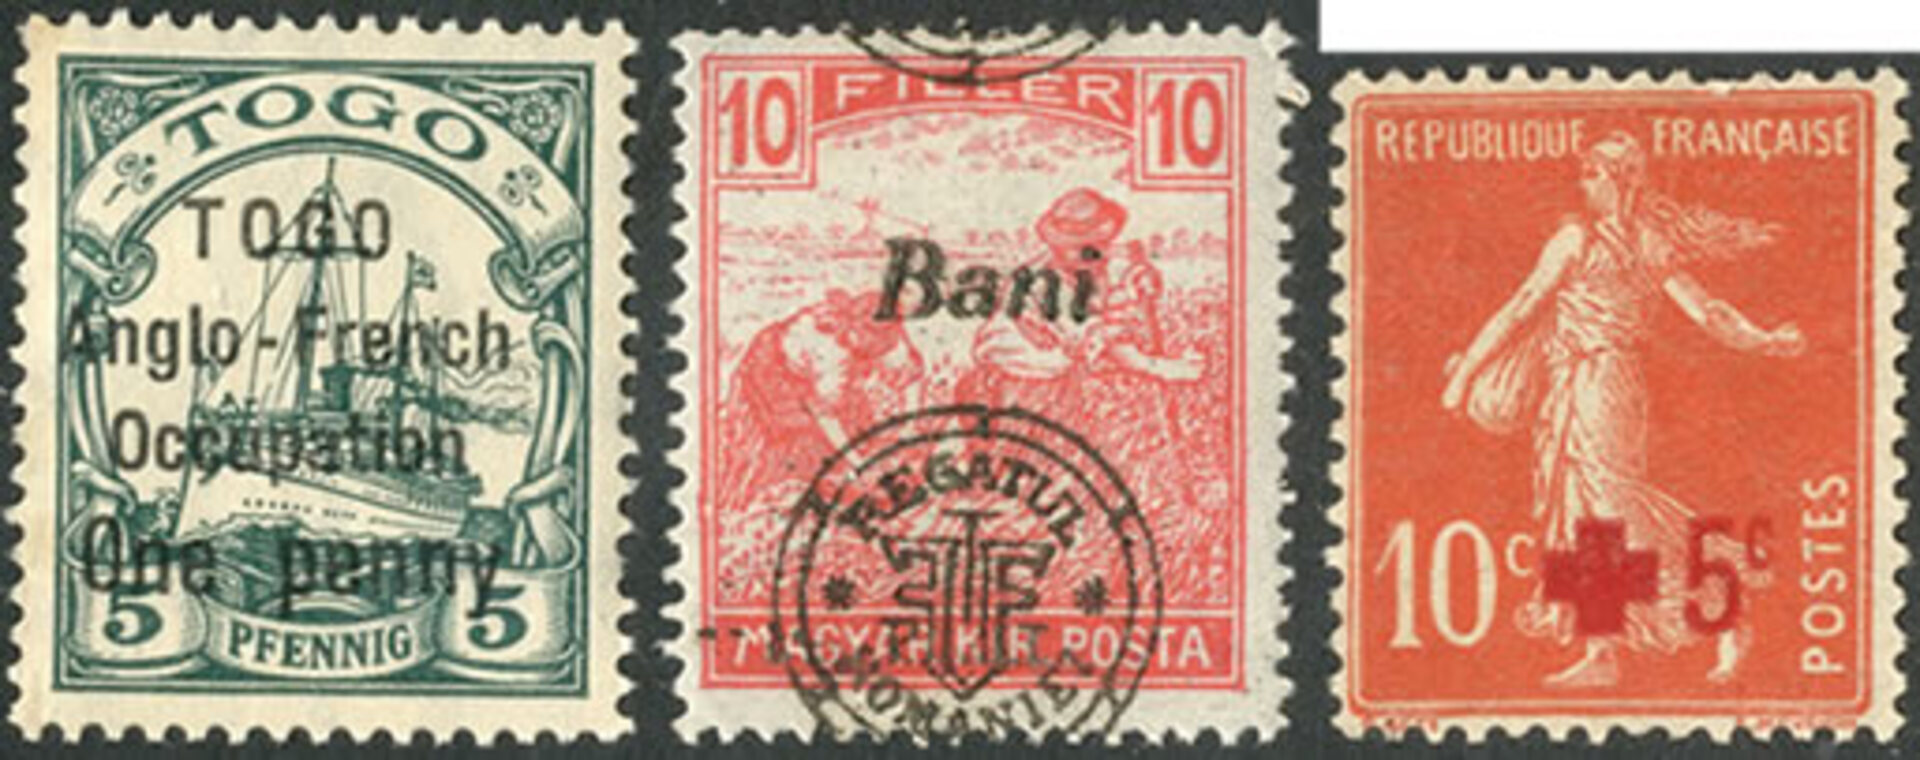 Romanian Bani stamps